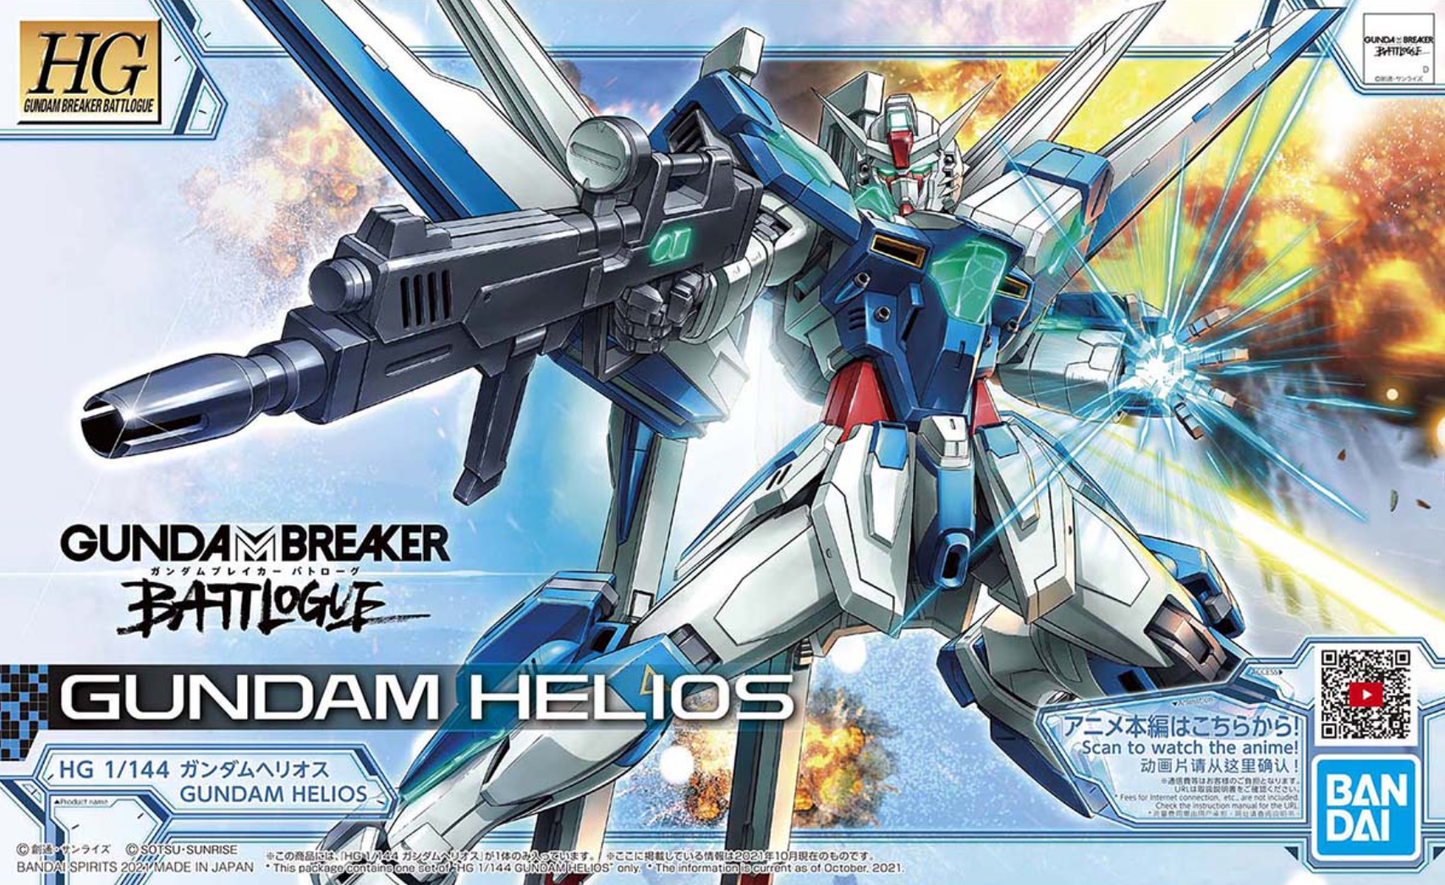 HG 1/144 Gundam Helios (Gundam Breaker Battlogue)